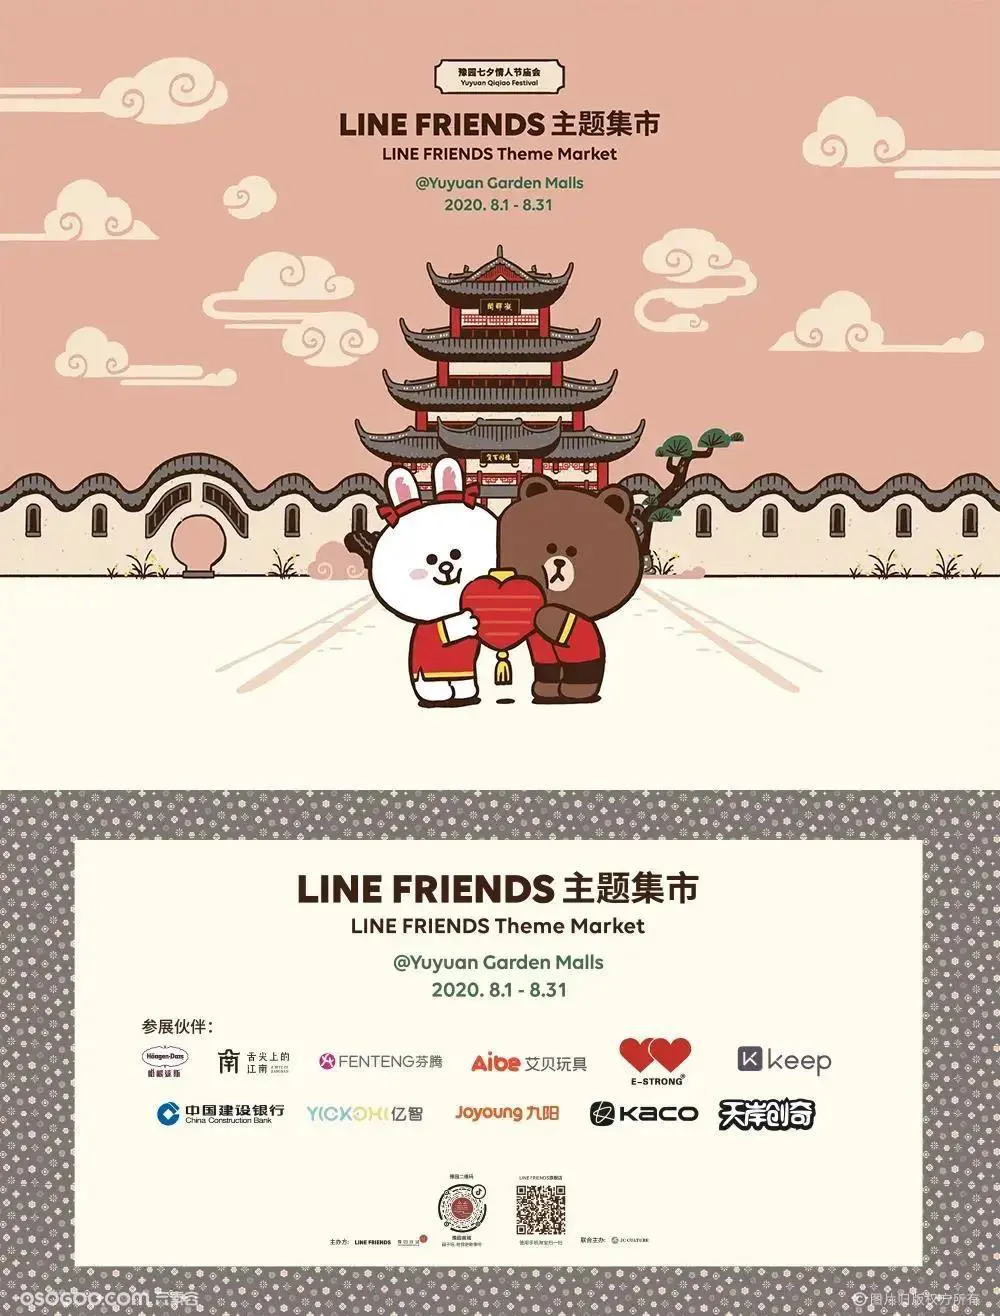 LINE FRIENDS携手豫园商城 举办七夕情人节庙会活动